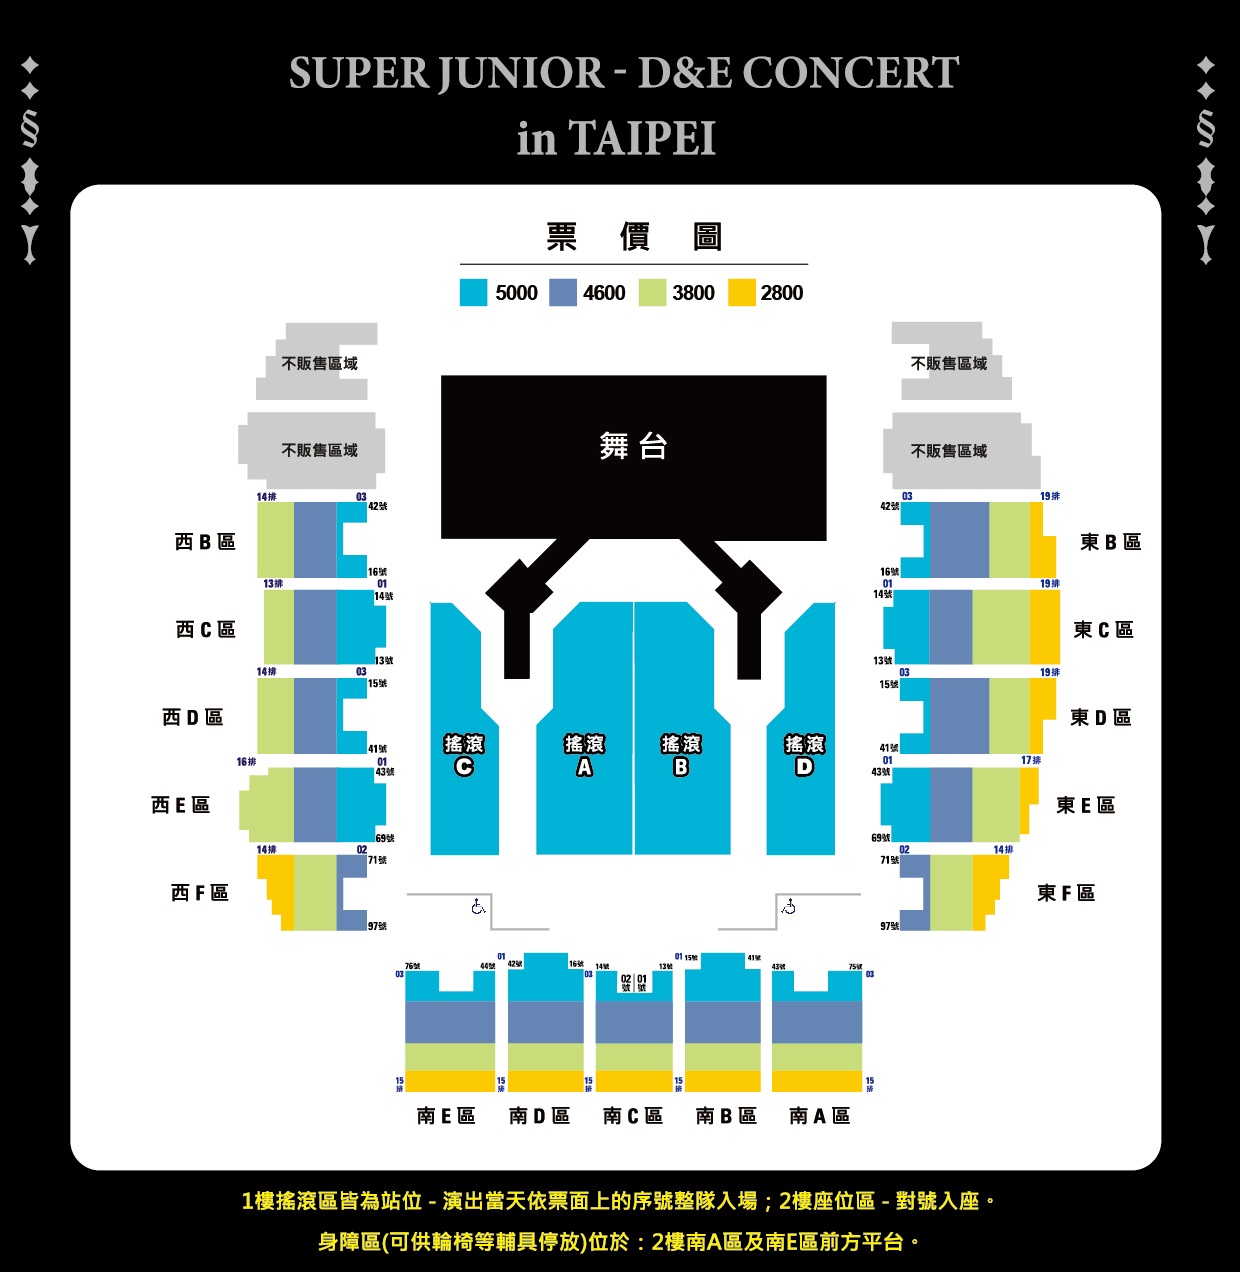 Super Junior D&E 台北演唱會 2019 座位圖 Seating Plan